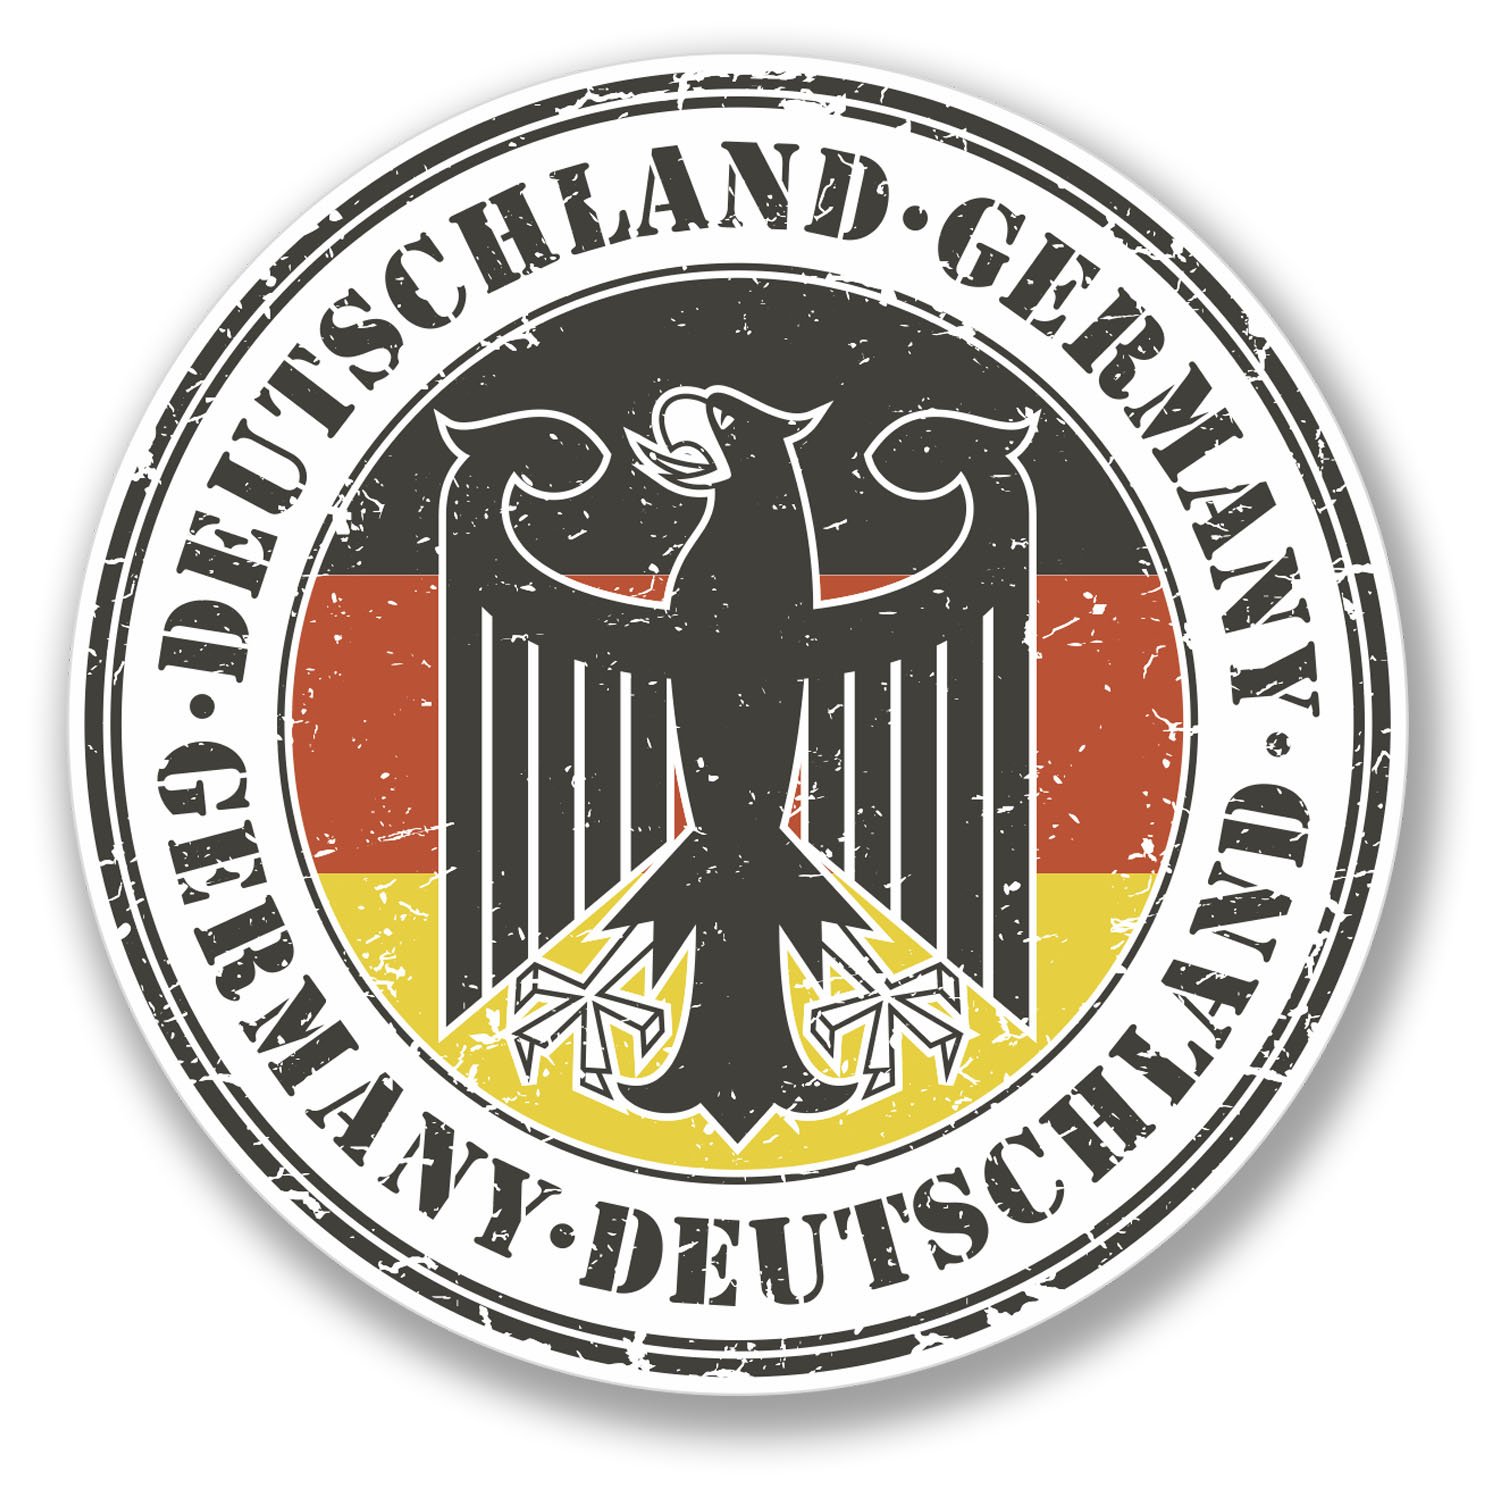 2 x Deutschland Deutschland Deutschland Deutschland Adler Aufkleber Auto Bike iPad Laptop Aufkleber #4107 (10cm x 10cm) von DestinationVinyl